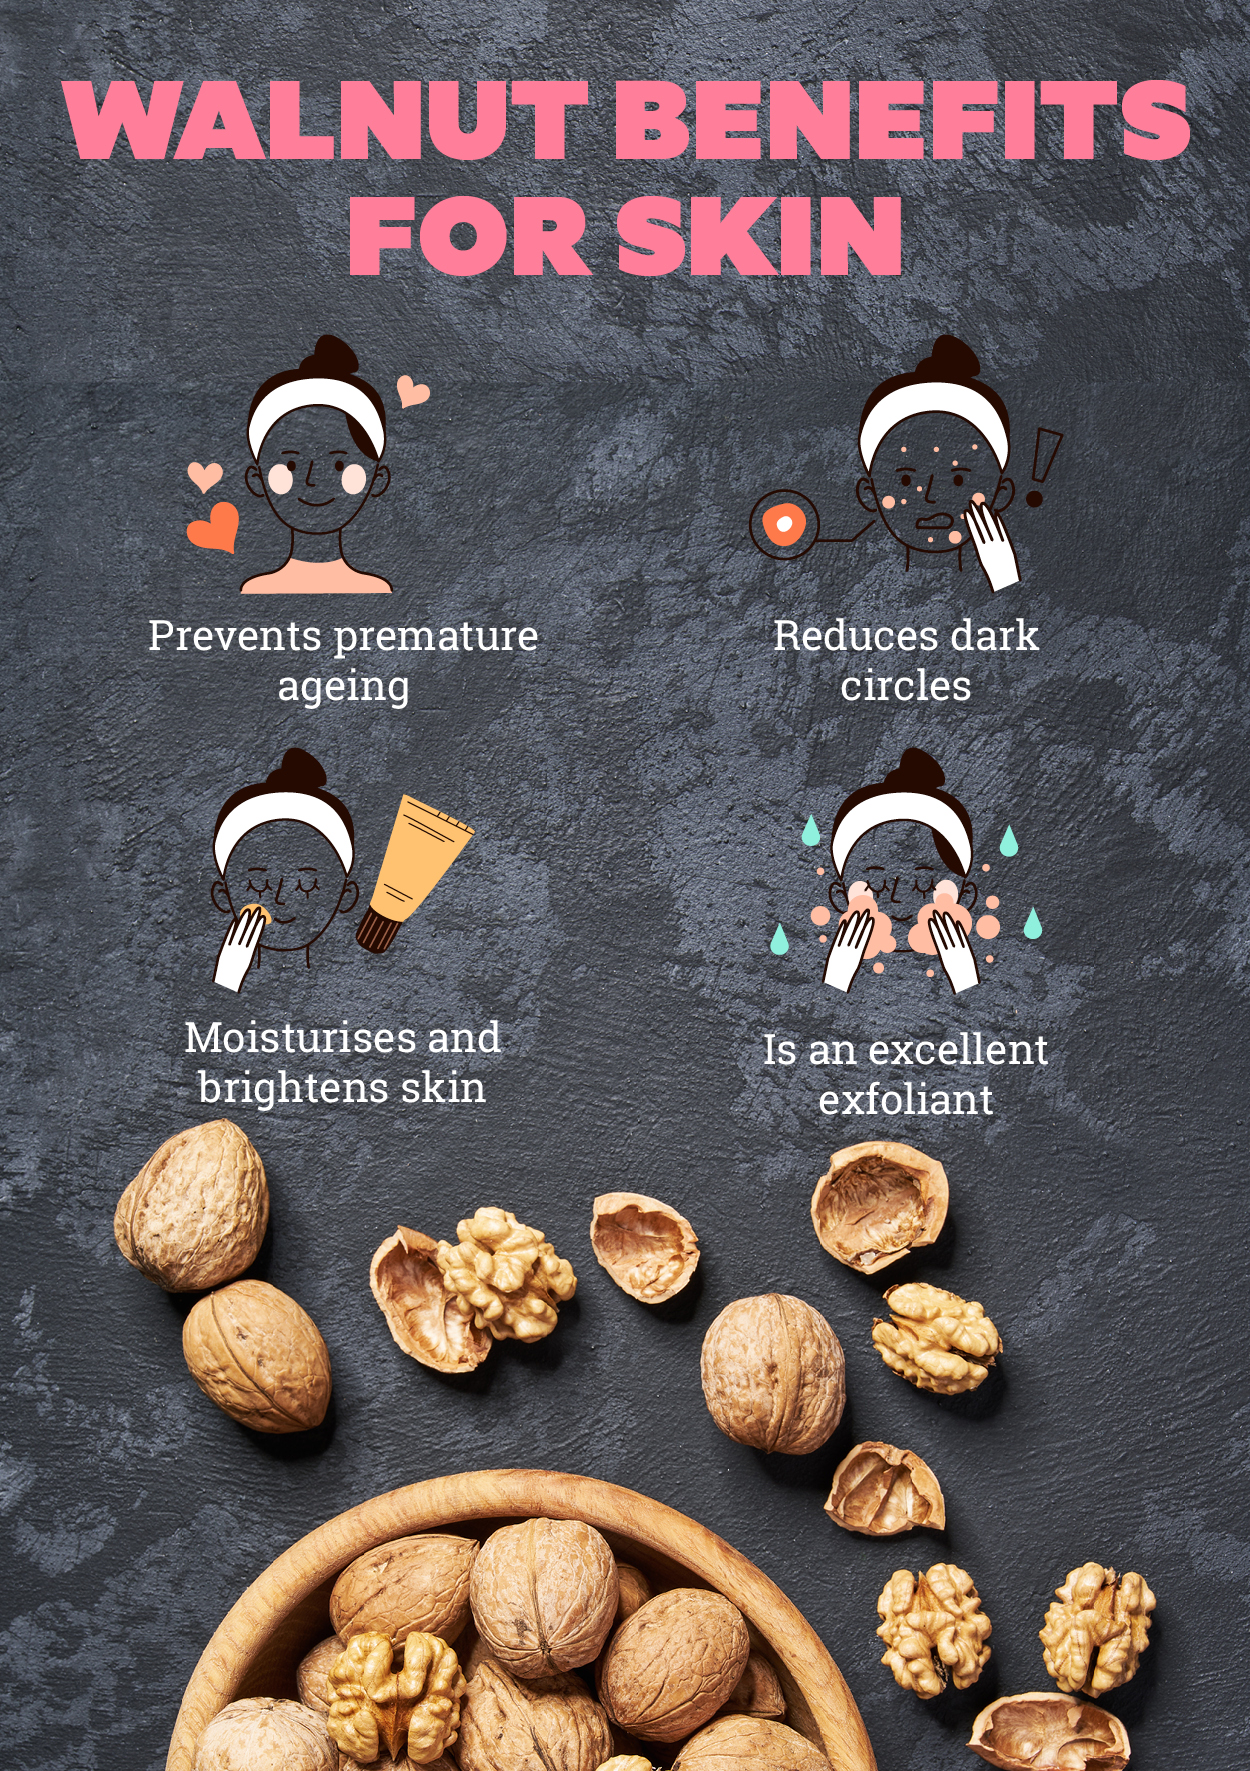 FAQs about walnut benefits